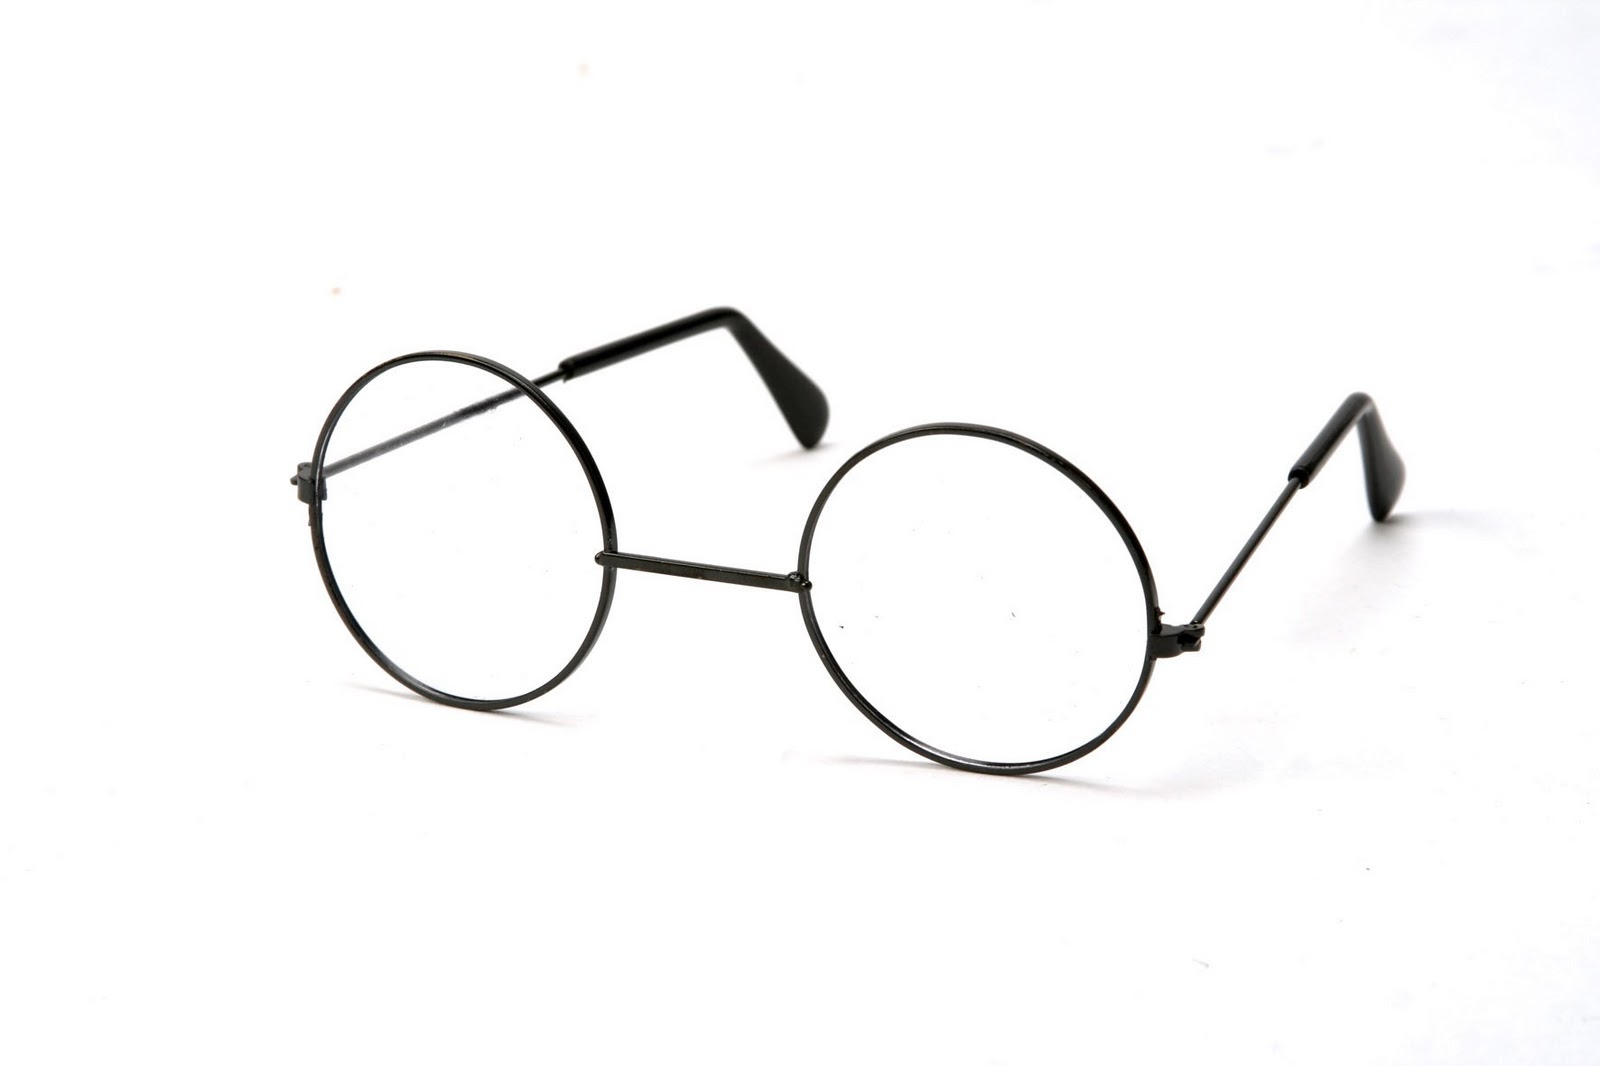 Eyeglasses clipart bifocal glass, Eyeglasses bifocal glass.